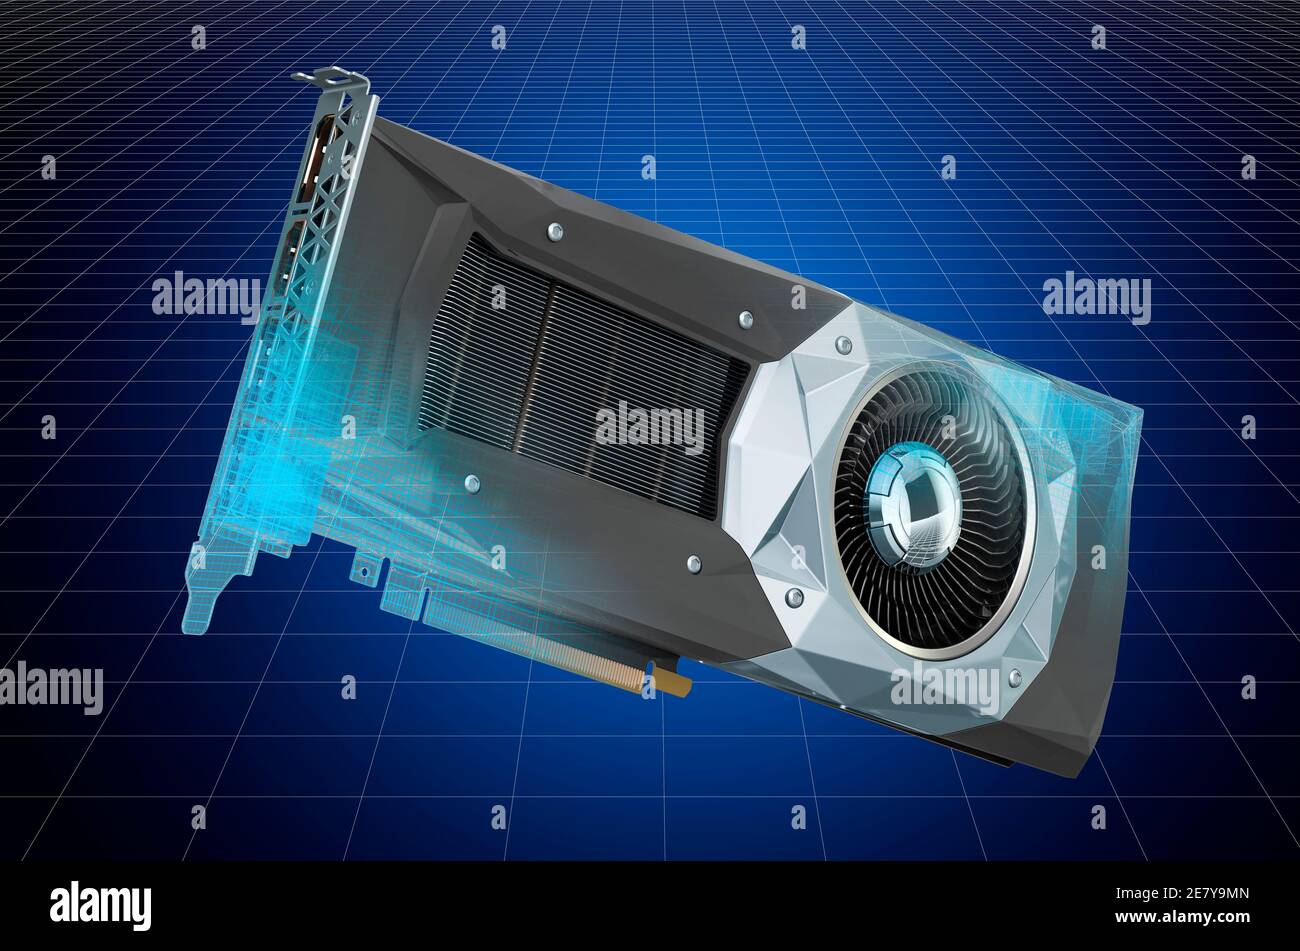 Visualisierung 3d-cad-Modell der Grafikkarte GPU, Blaupause. 3D-Rendering  Stockfotografie - Alamy